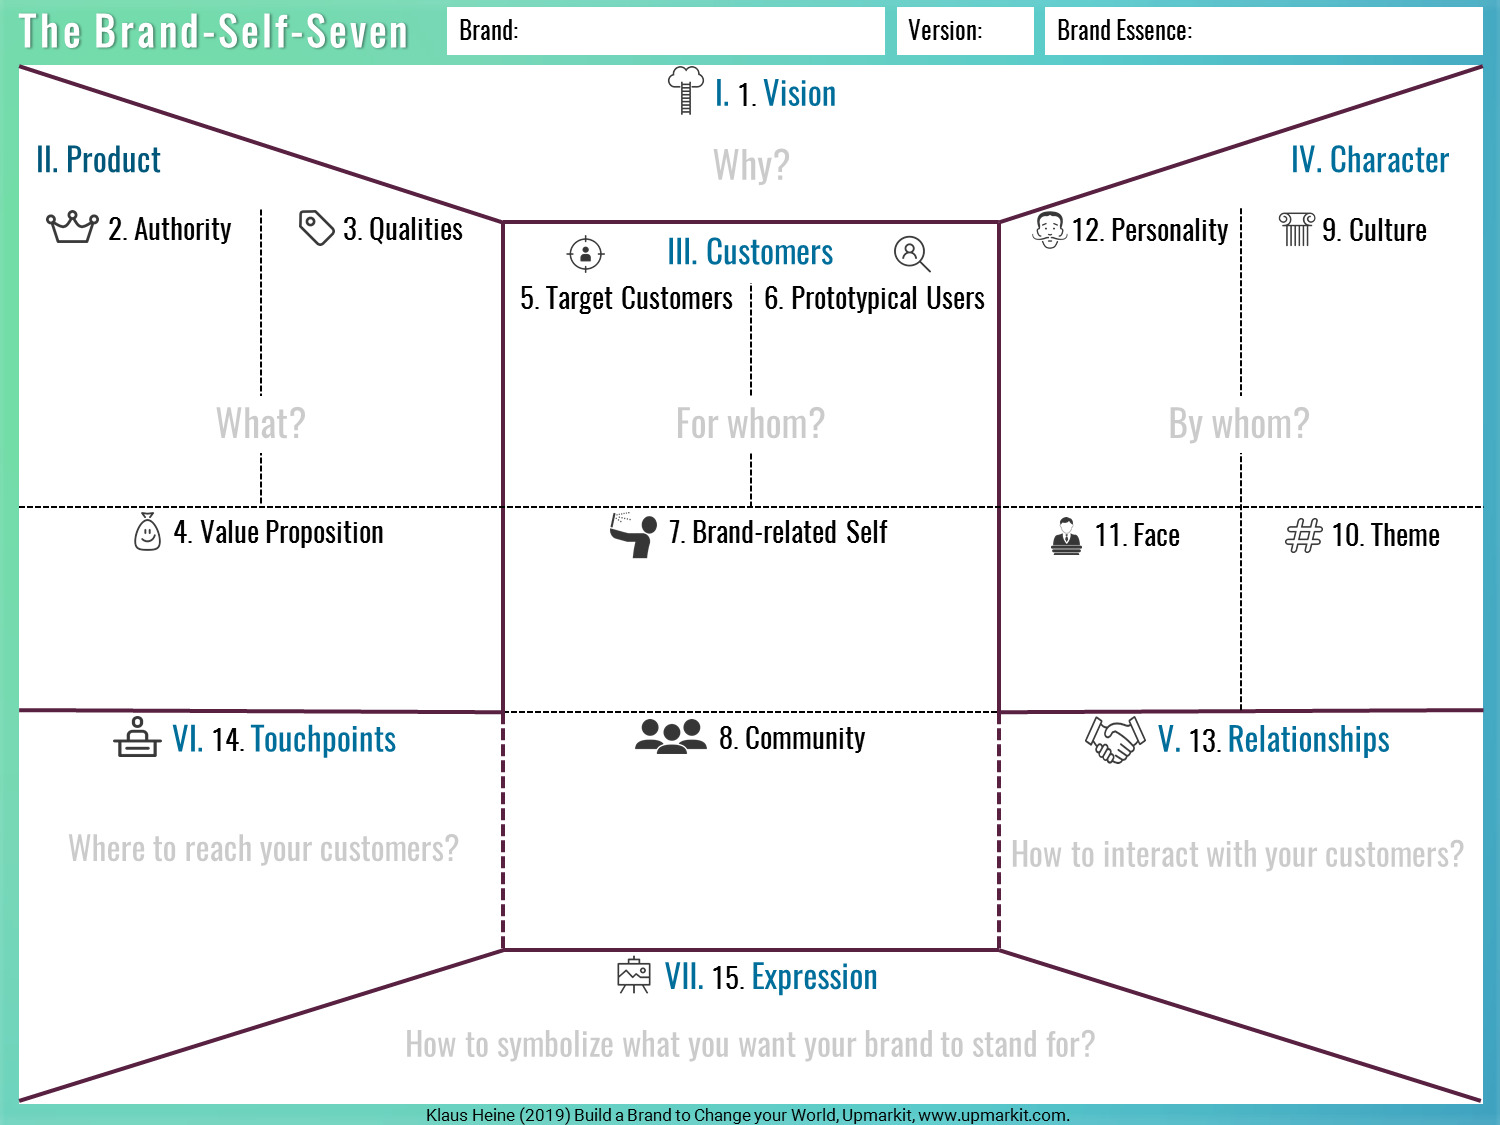 The Brand-Self-Seven Brand Identity Planning Model